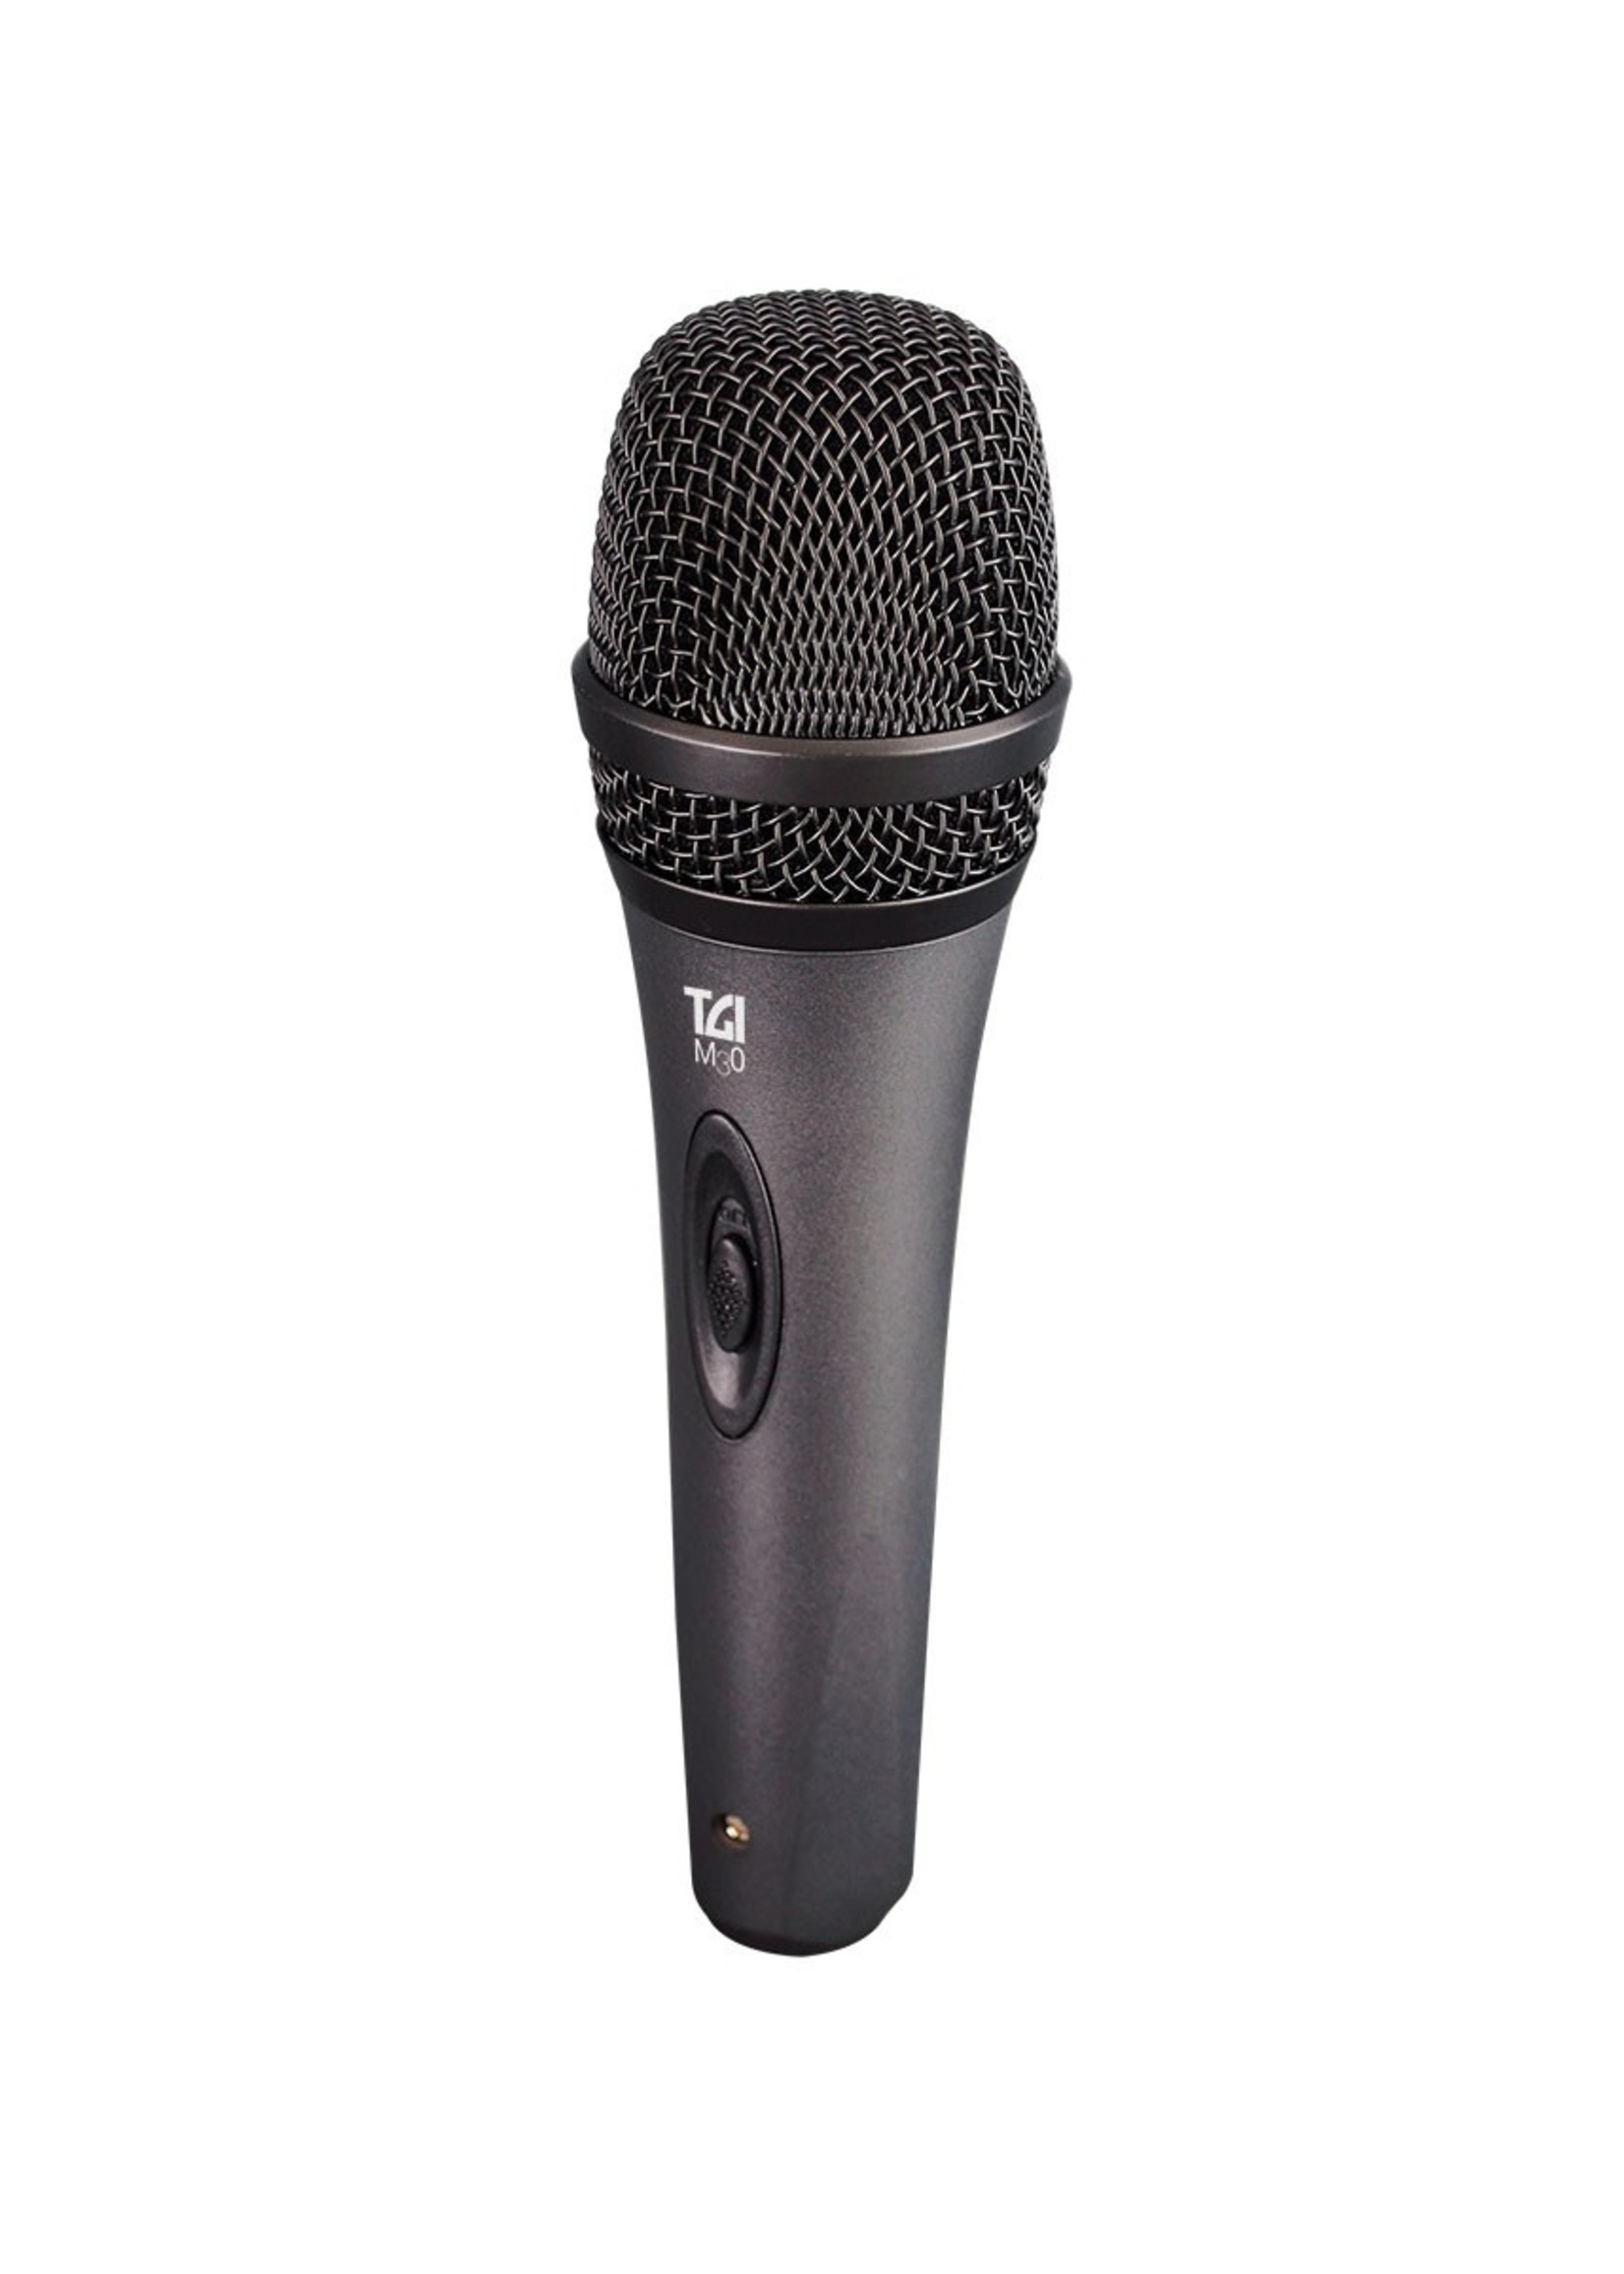 TGI M30 Dynamic Microphone